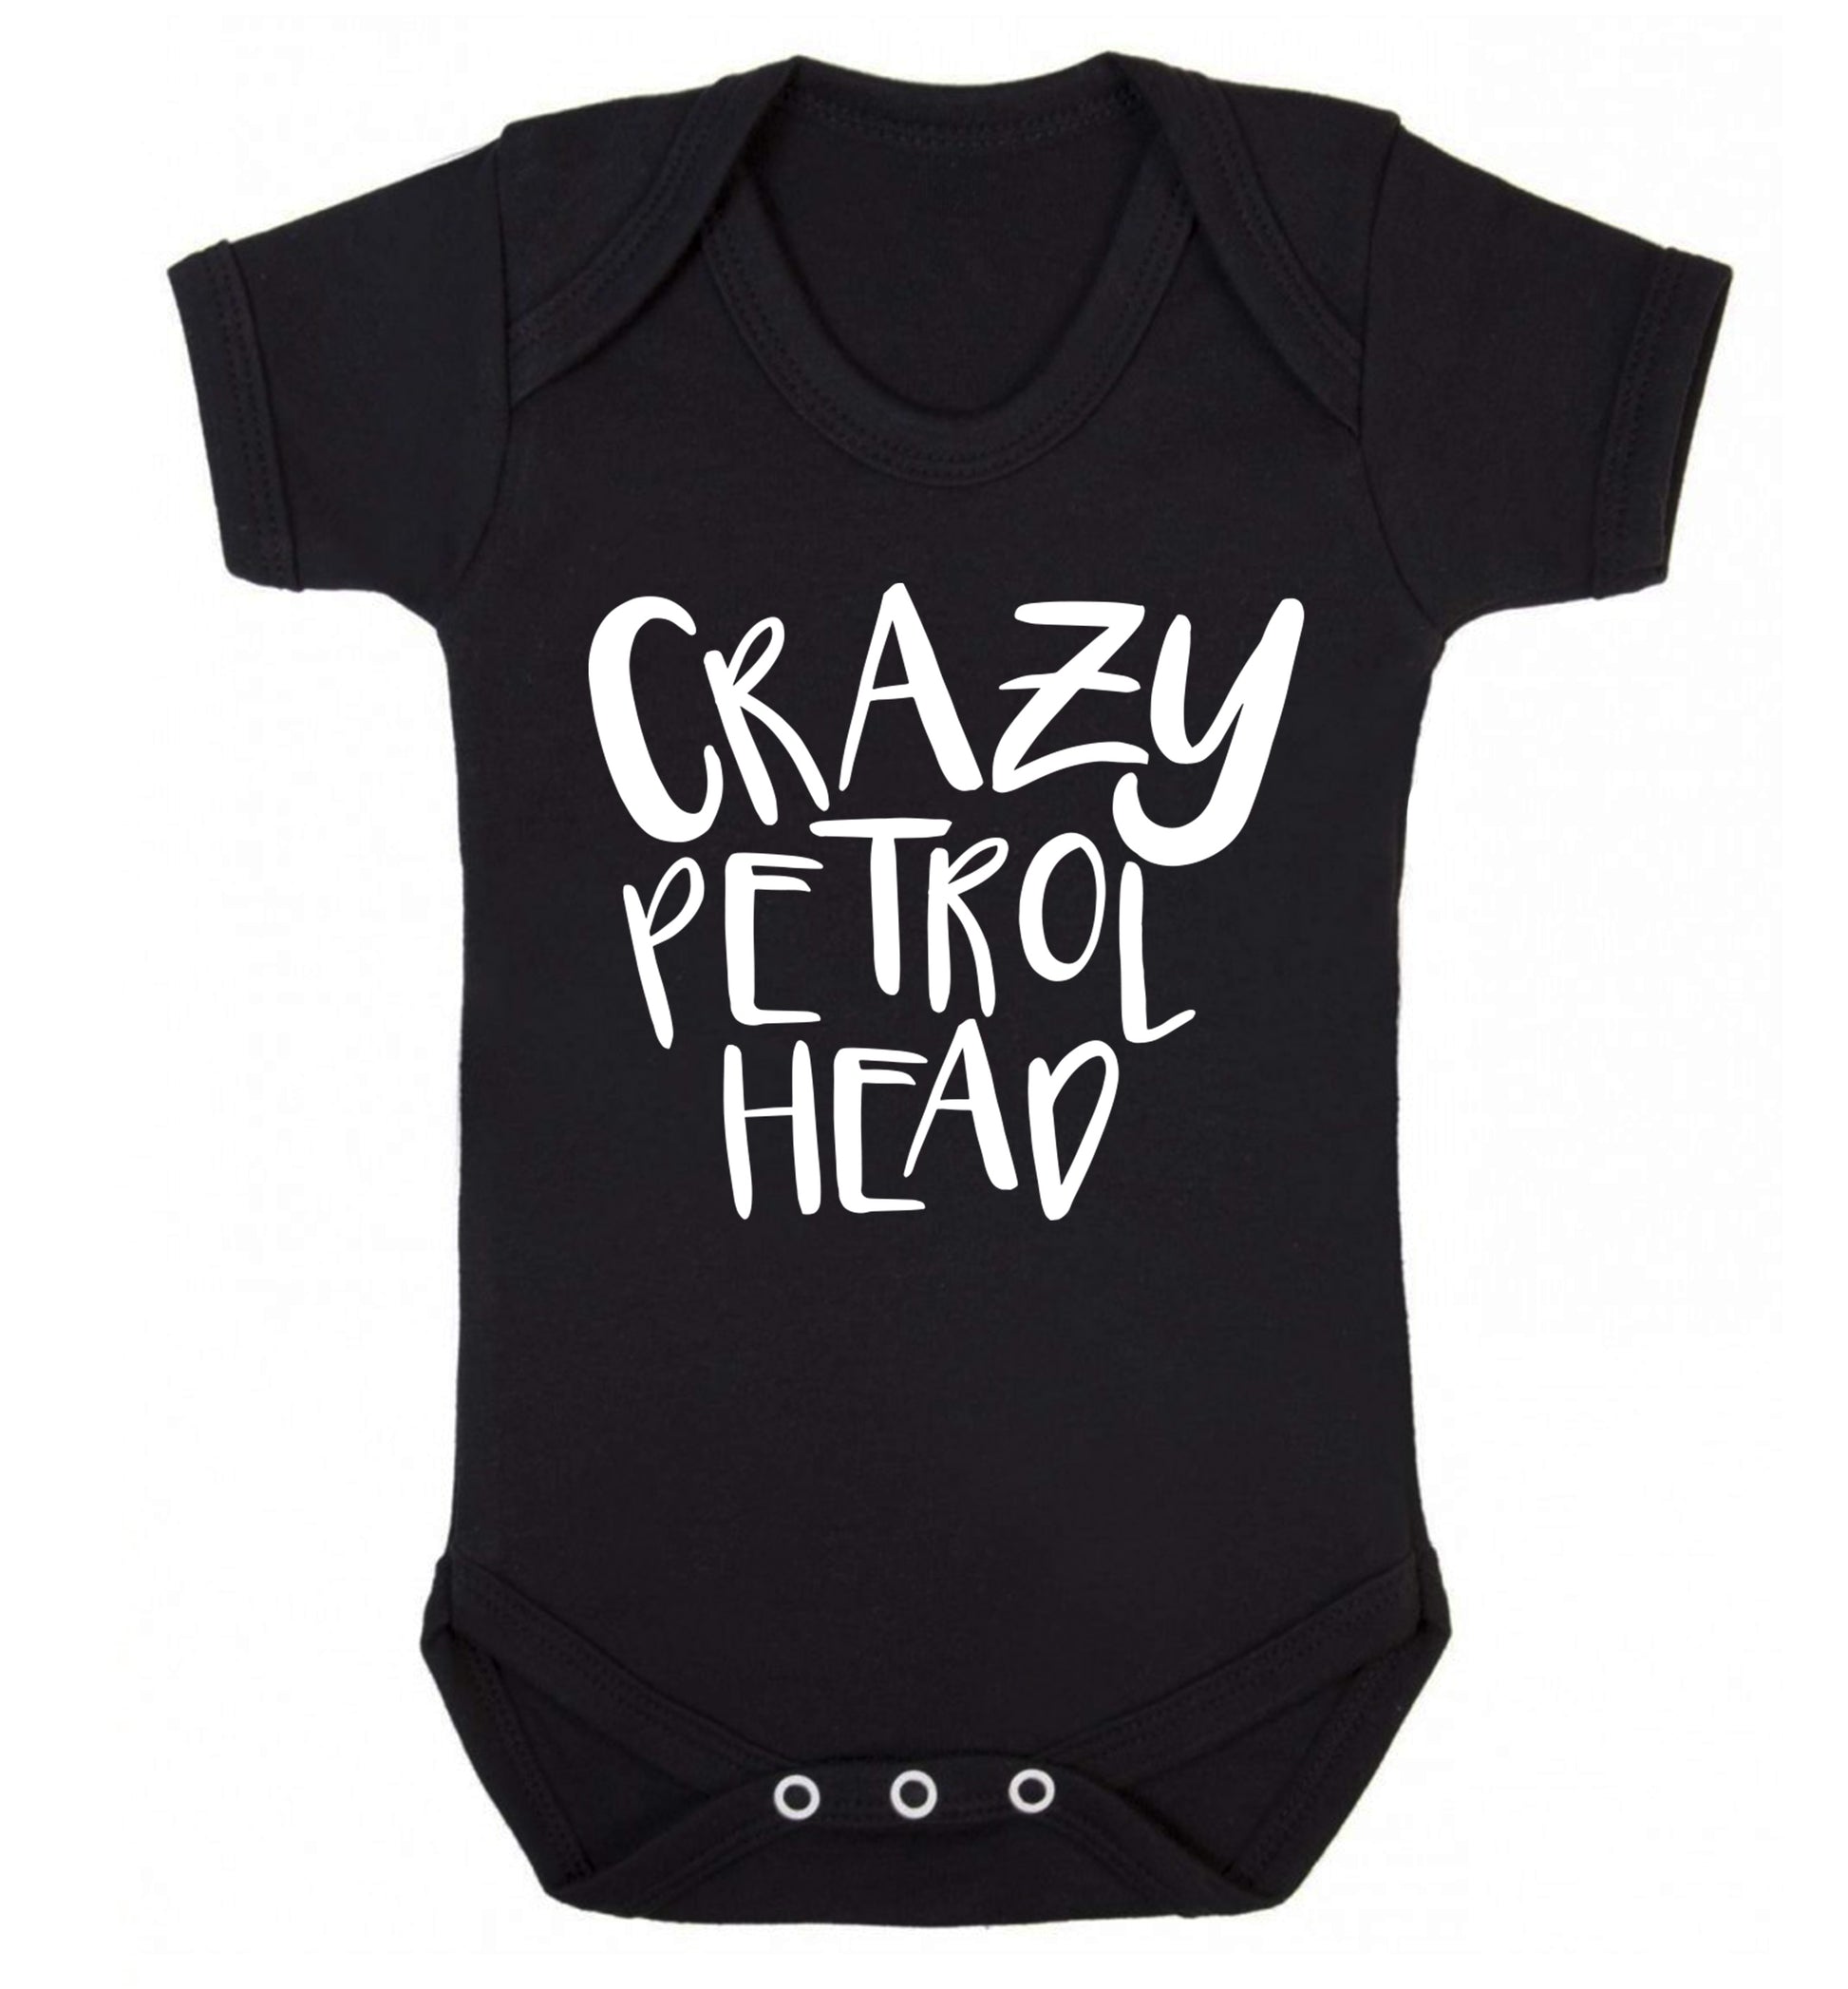 Crazy petrol head Baby Vest black 18-24 months